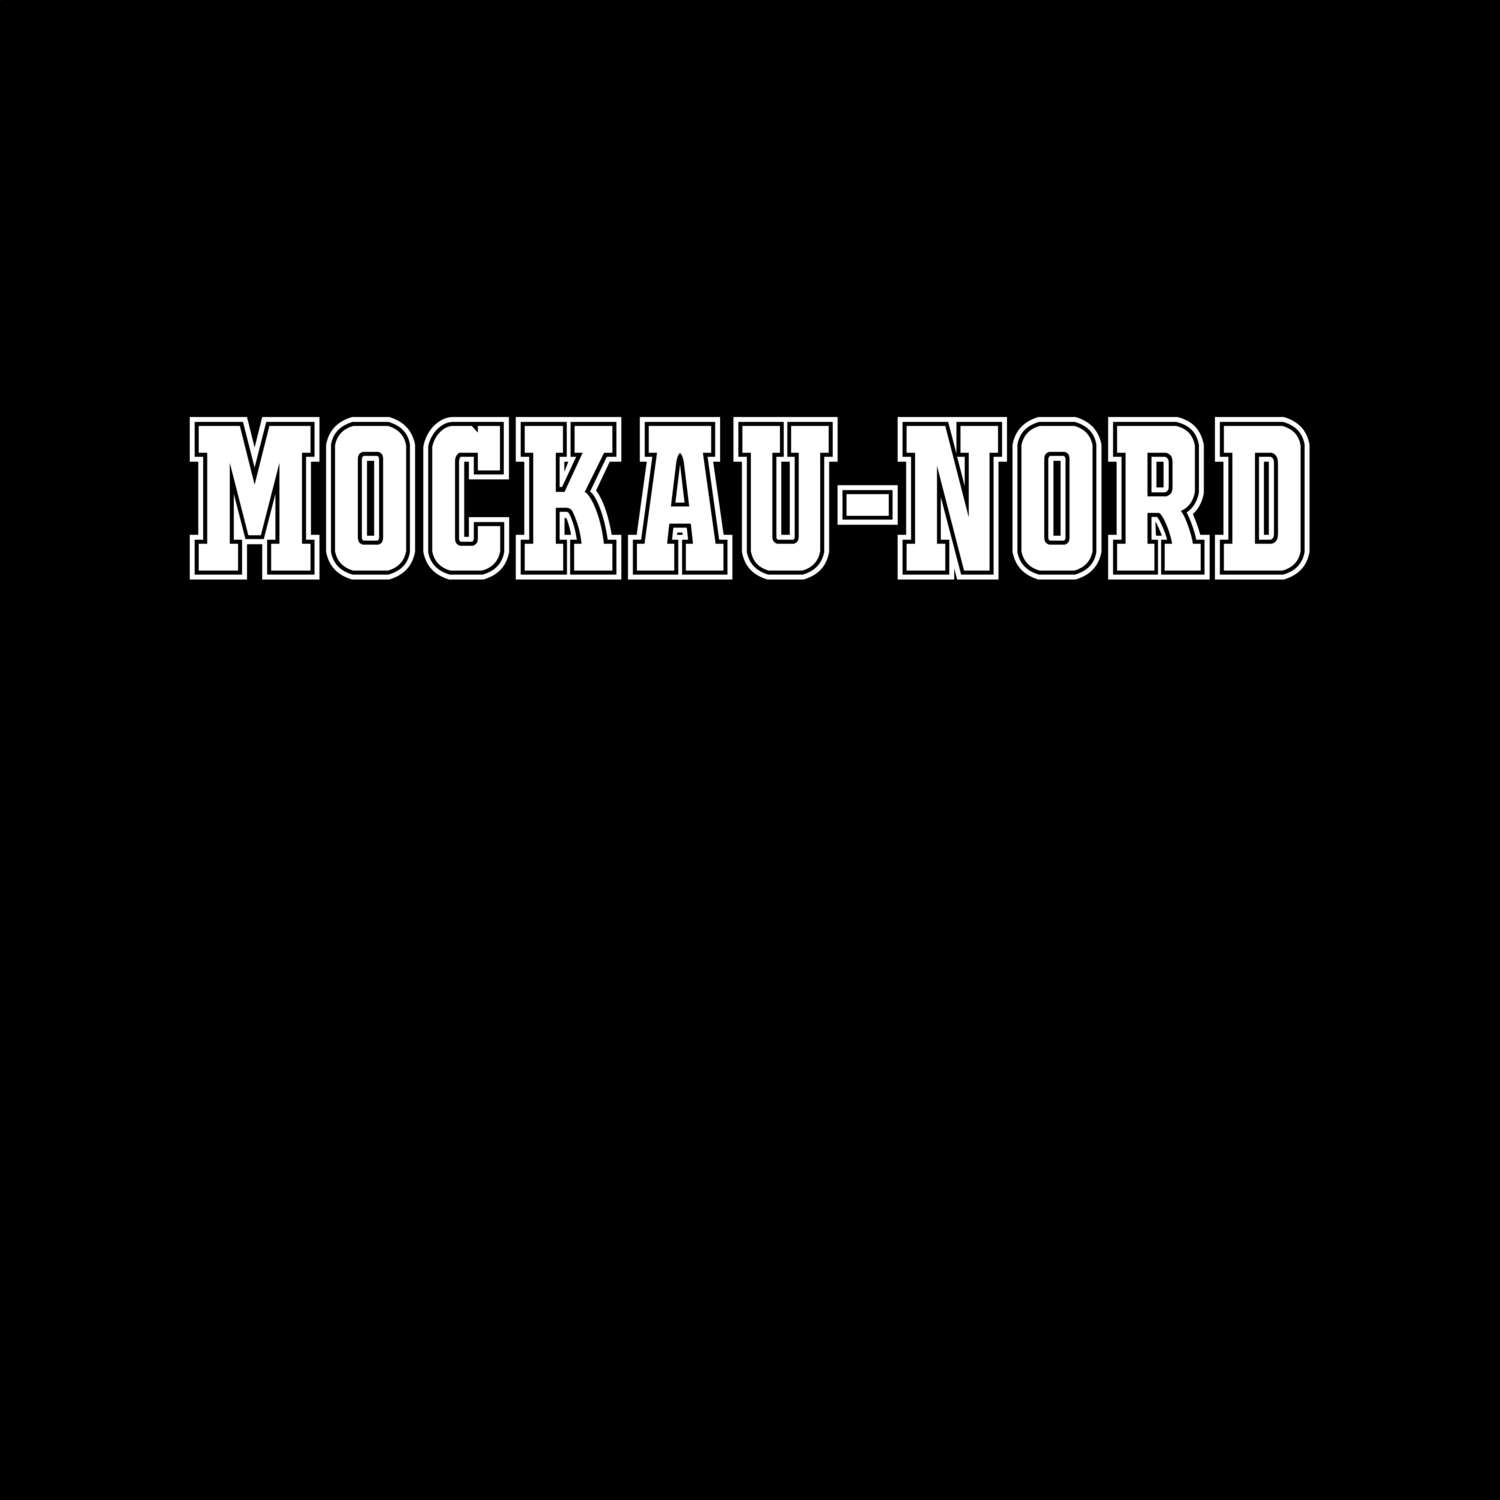 Mockau-Nord T-Shirt »Classic«